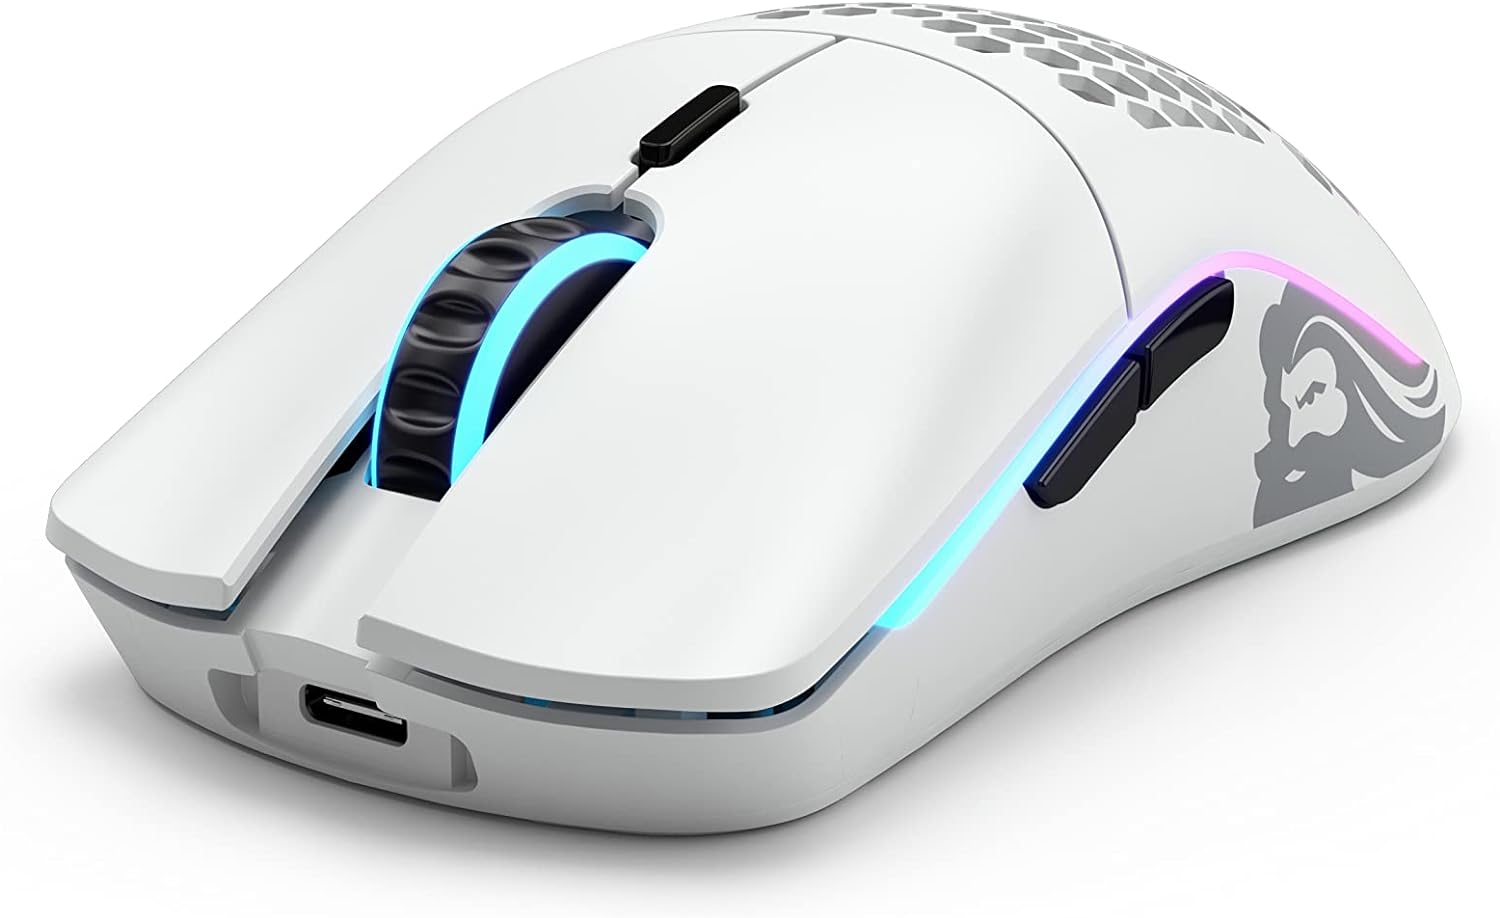 Superlight Ergonomic Wireless Gaming Mouse - Honeycomb Shell Design - RGB Lights 0850005352693